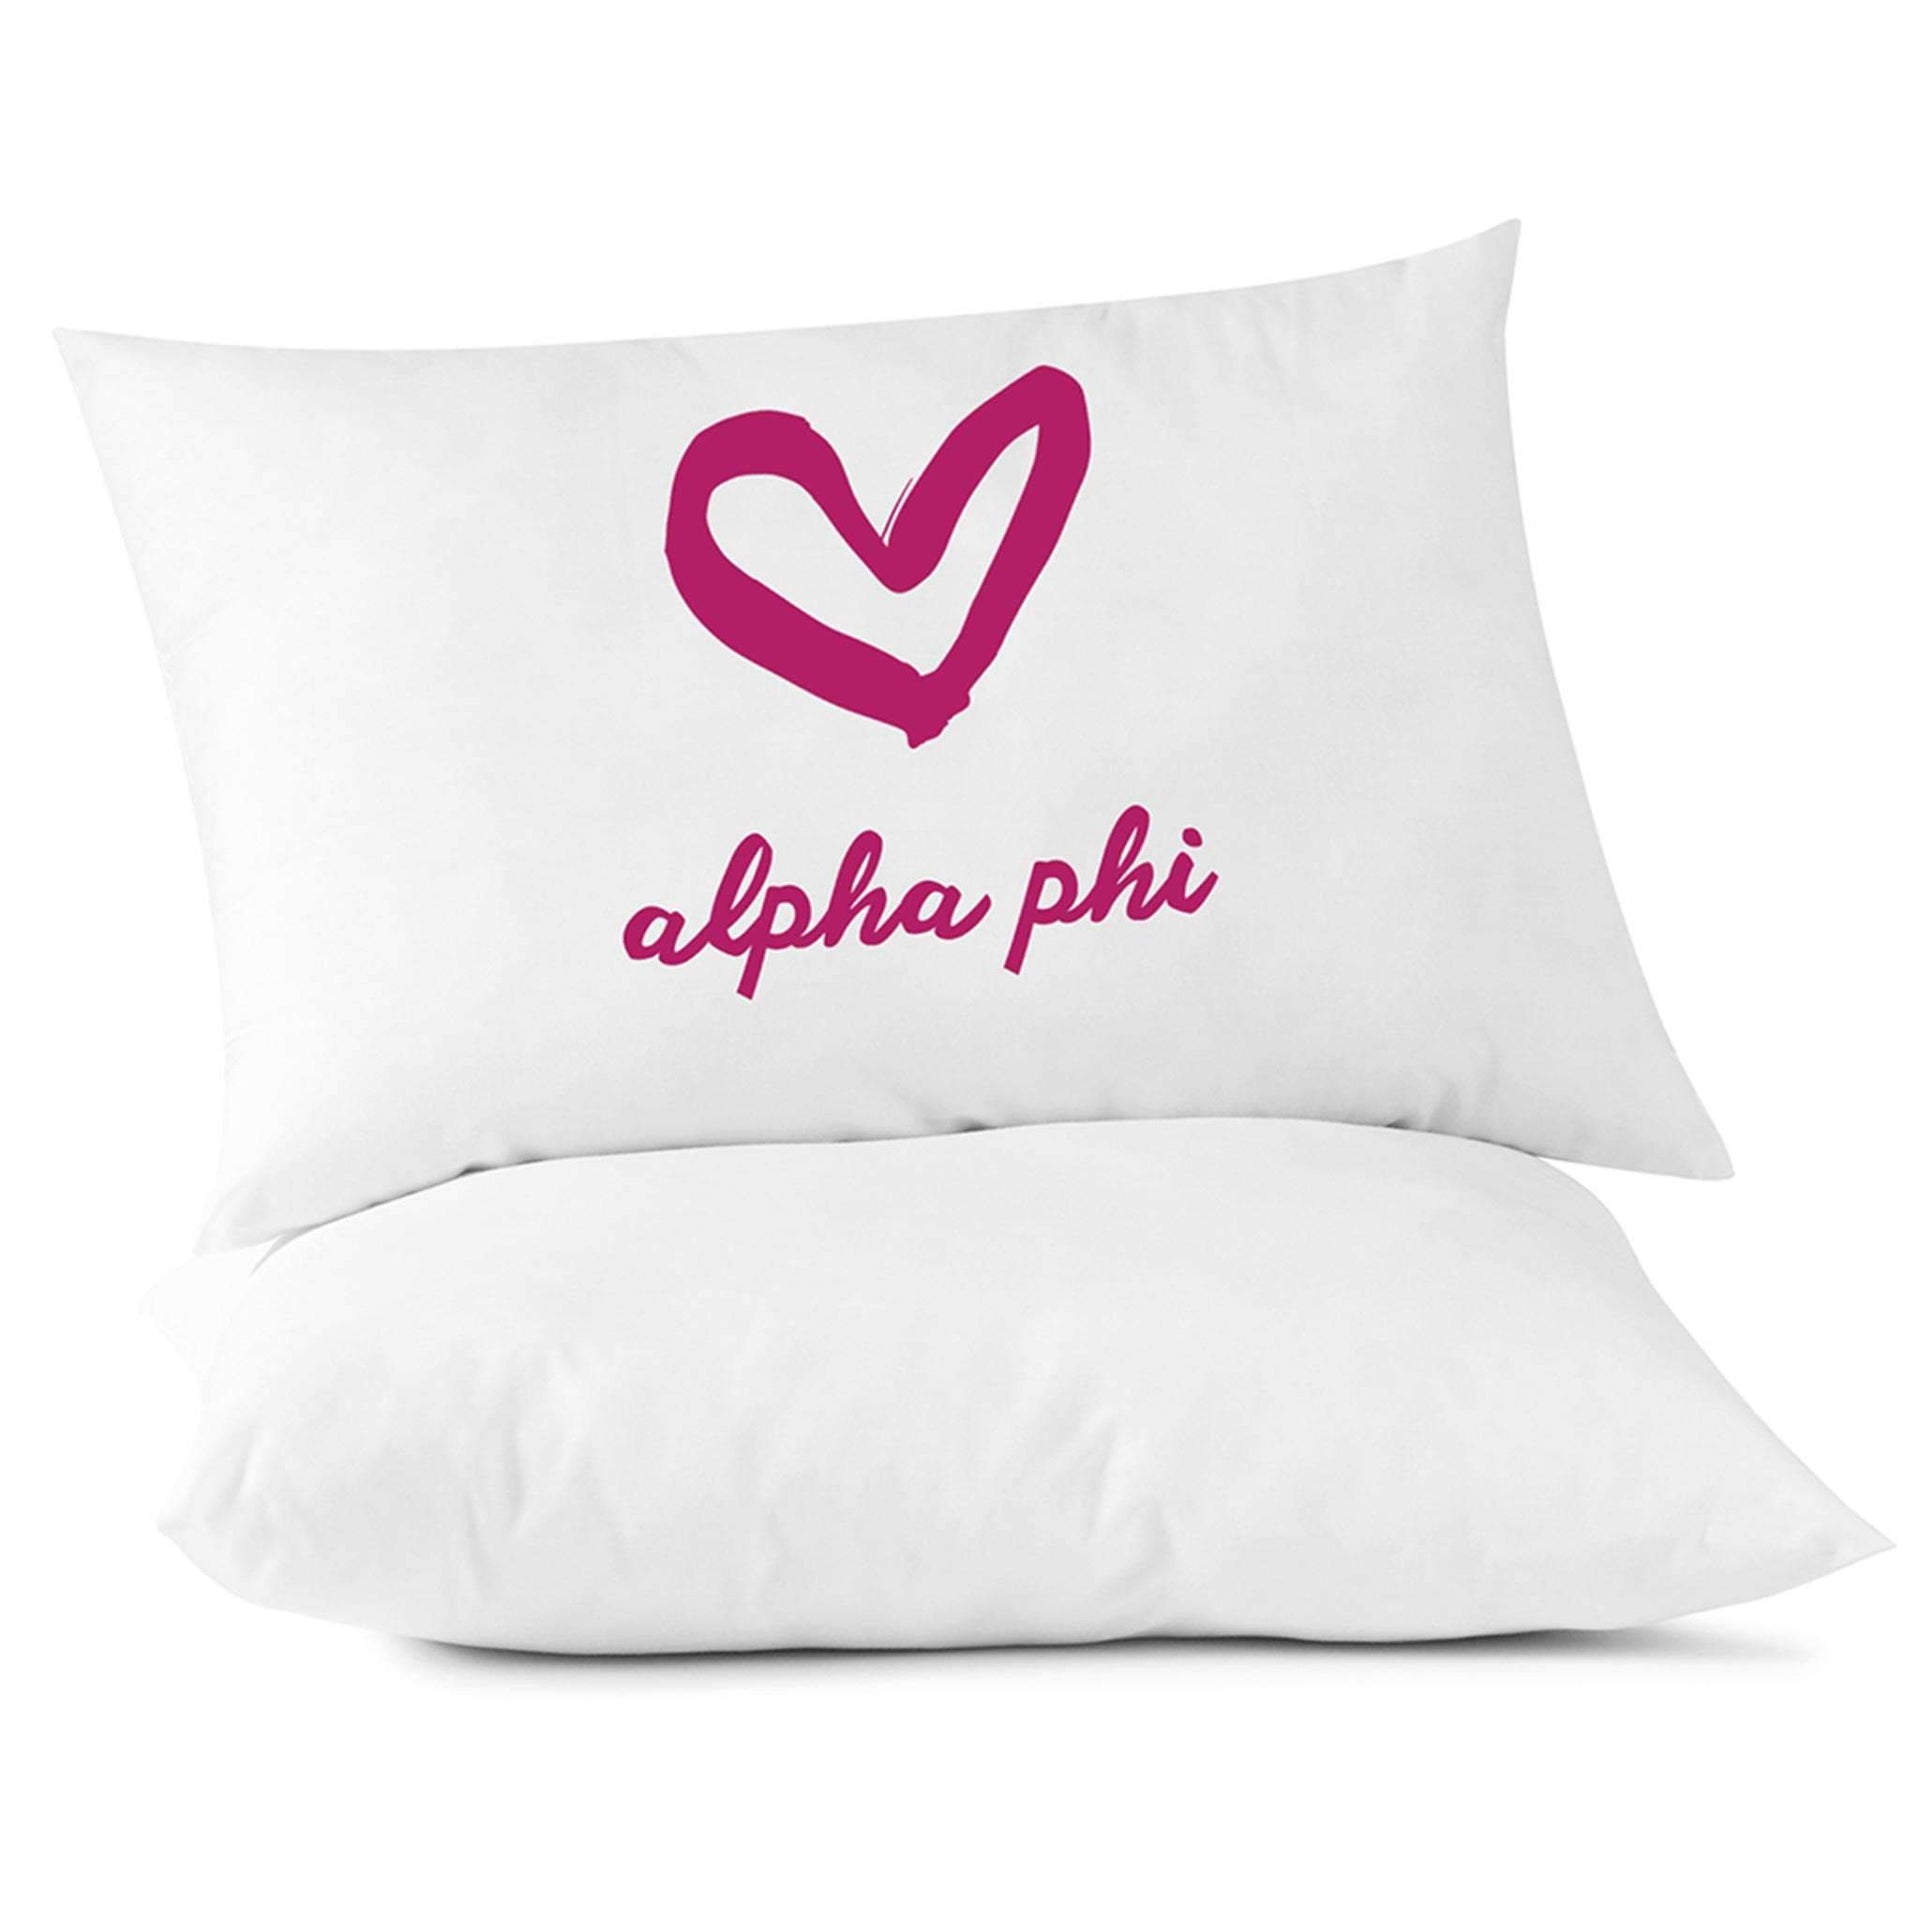 Alpha Phi sorority name with heart design custom printed on pillowcase.